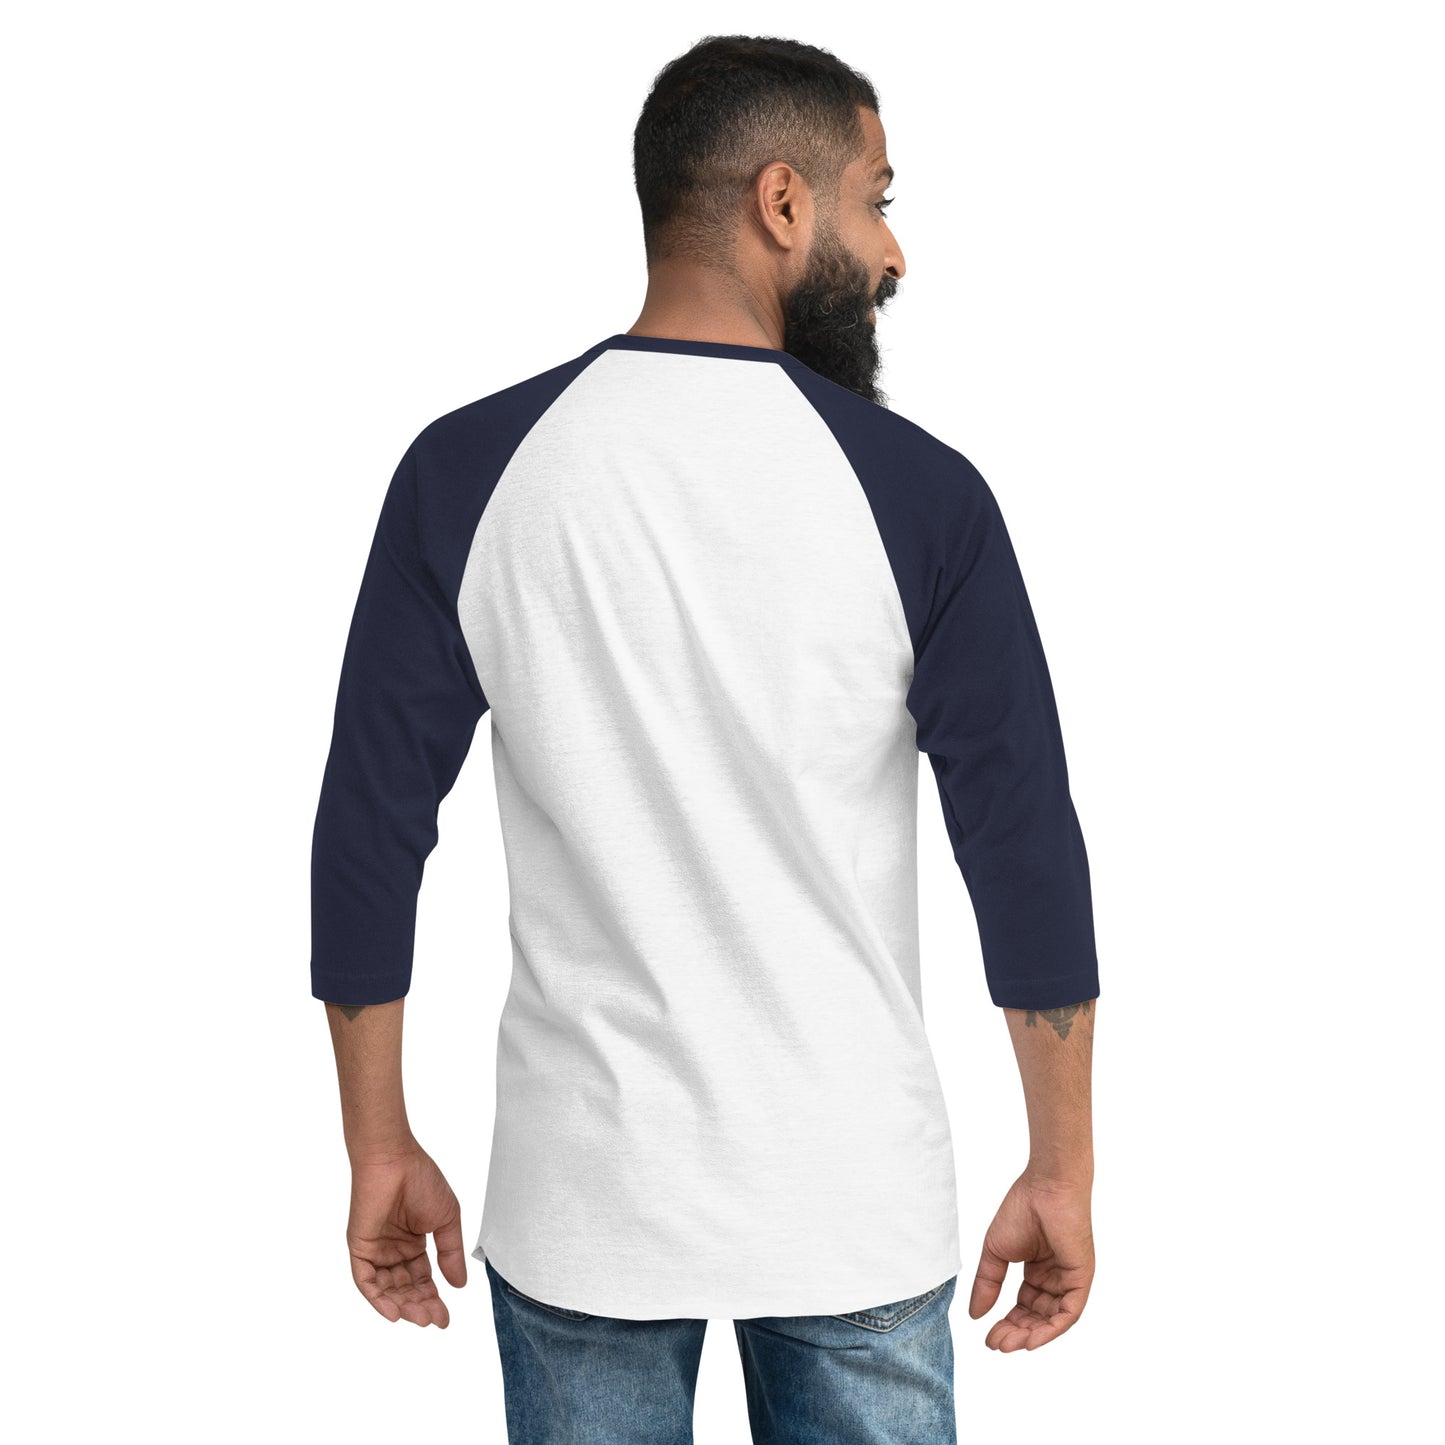 Gotham 3/4 sleeve raglan shirt